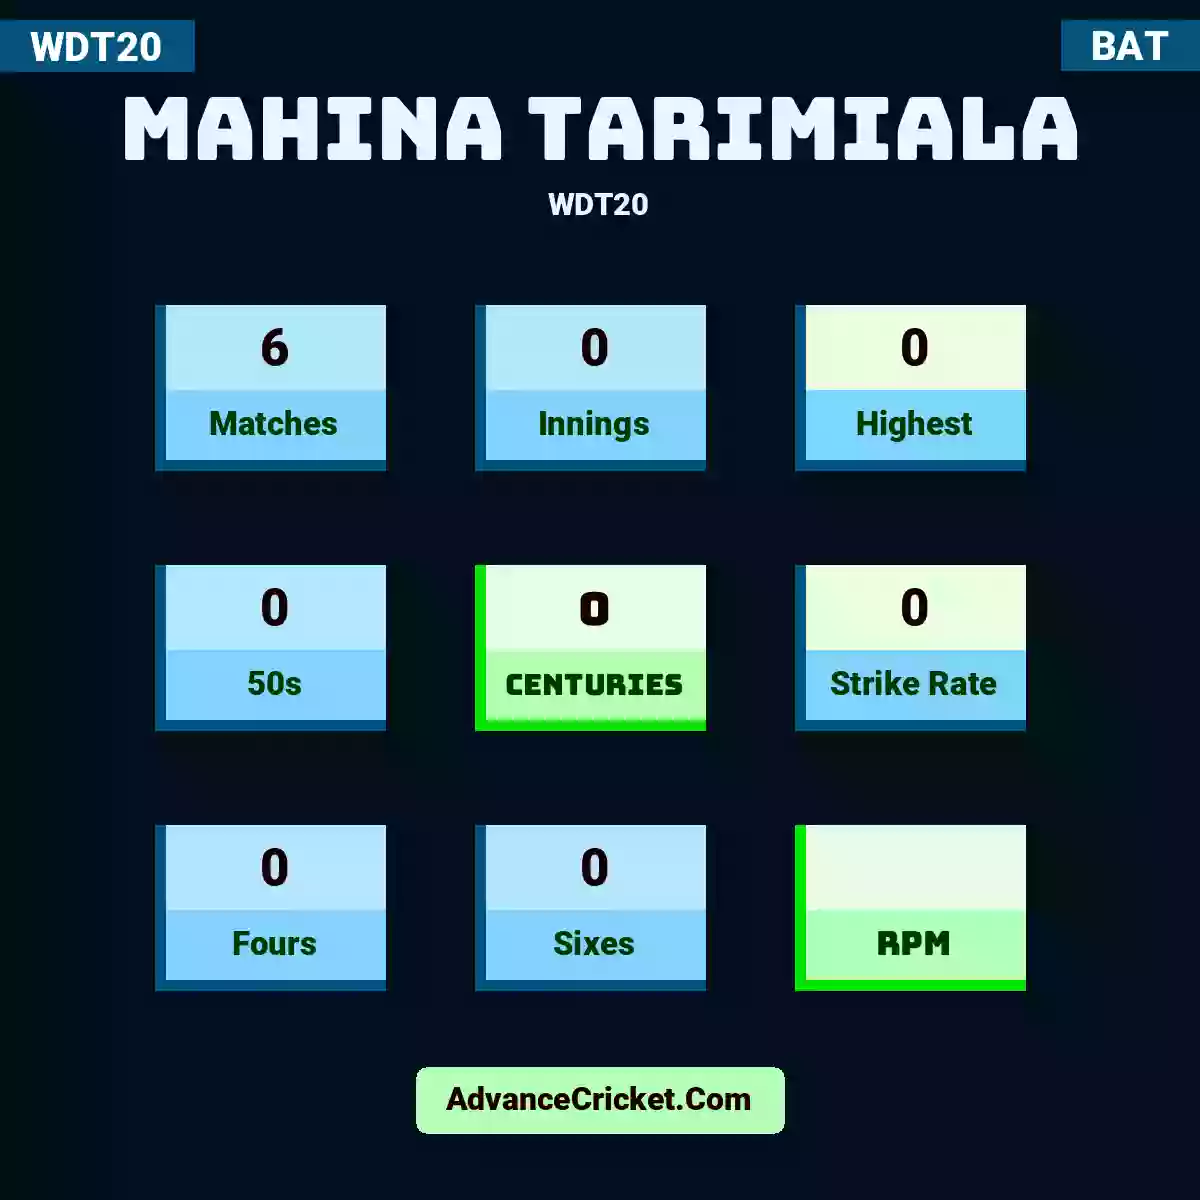 Mahina Tarimiala WDT20 , Mahina Tarimiala played 6 matches, scored 0 runs as highest, 0 half-centuries, and 0 centuries, with a strike rate of 0. M.Tarimiala hit 0 fours and 0 sixes.